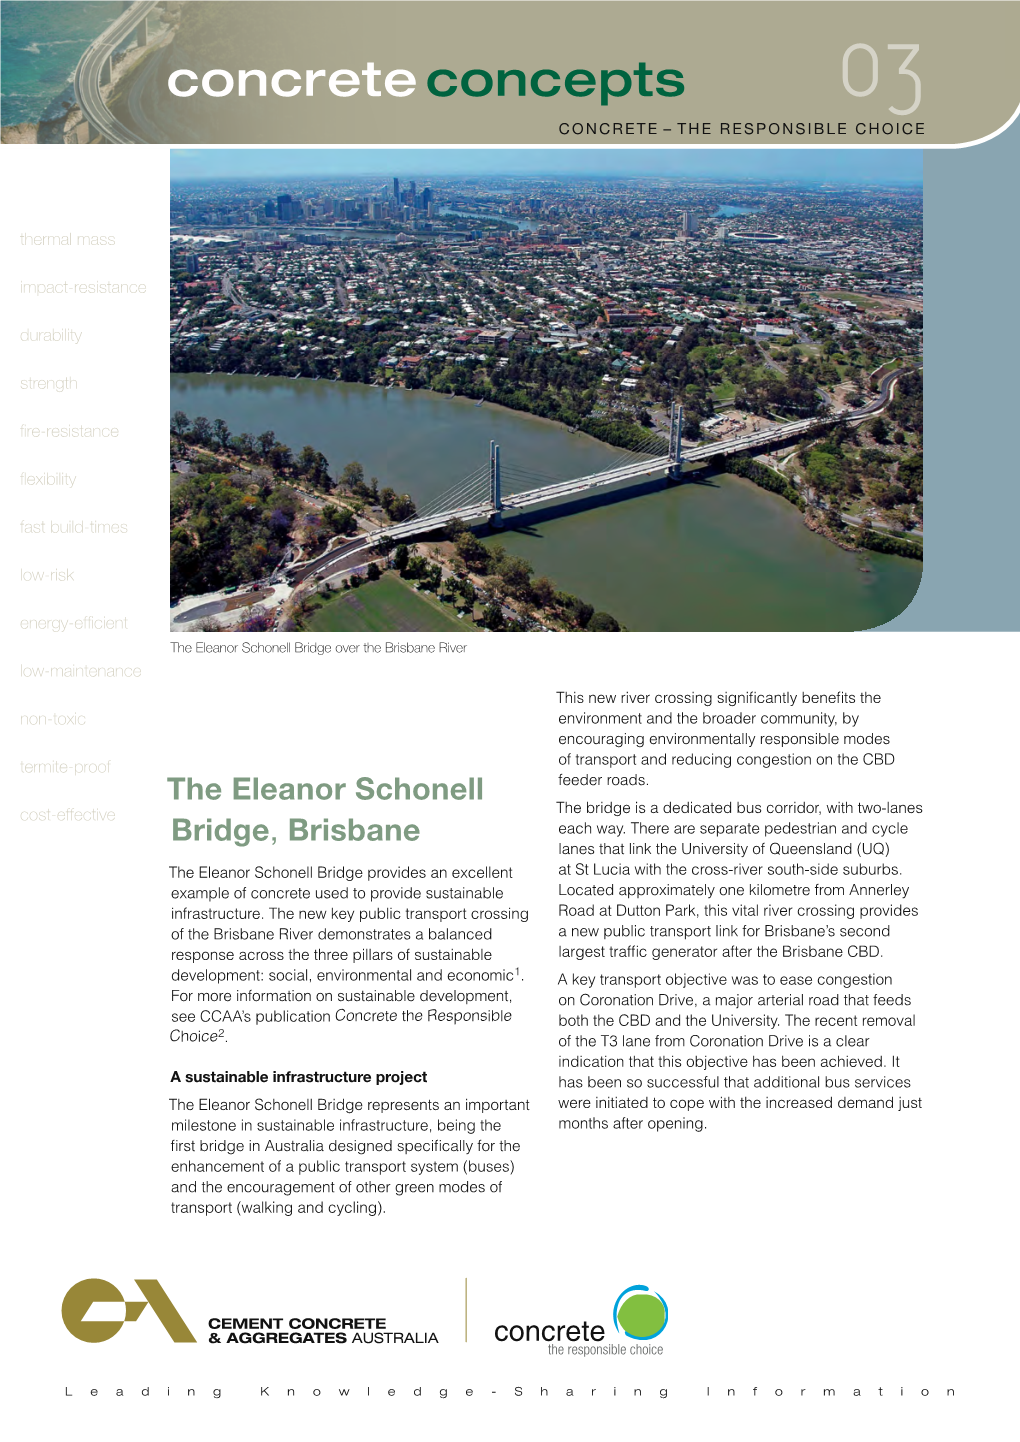 The Eleanor Schonell Bridge, Brisbane